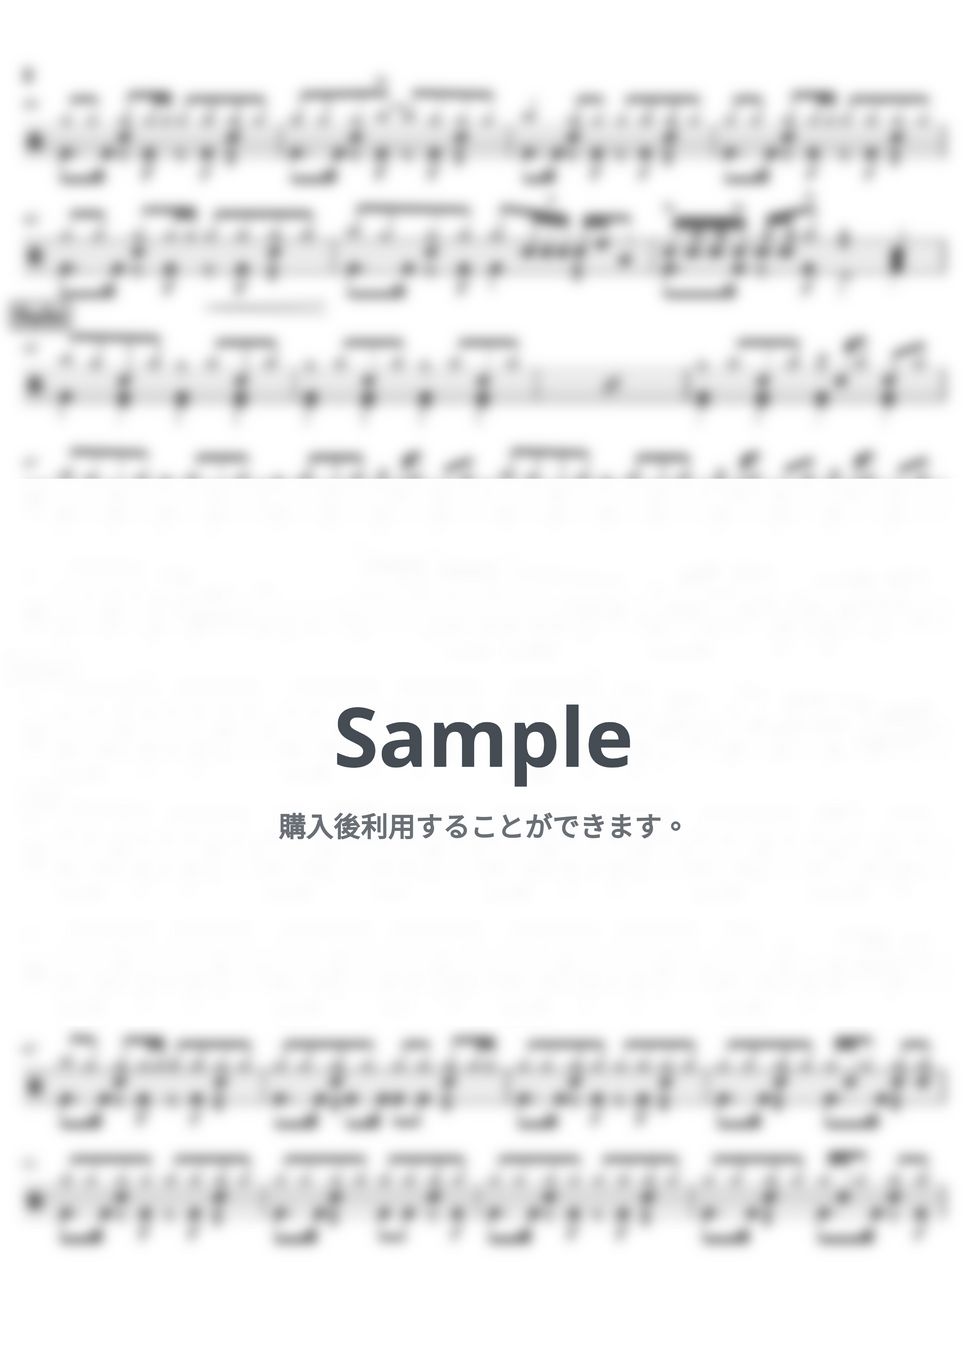 aiko - ひまわりになったら (ドラム譜面) by cabal